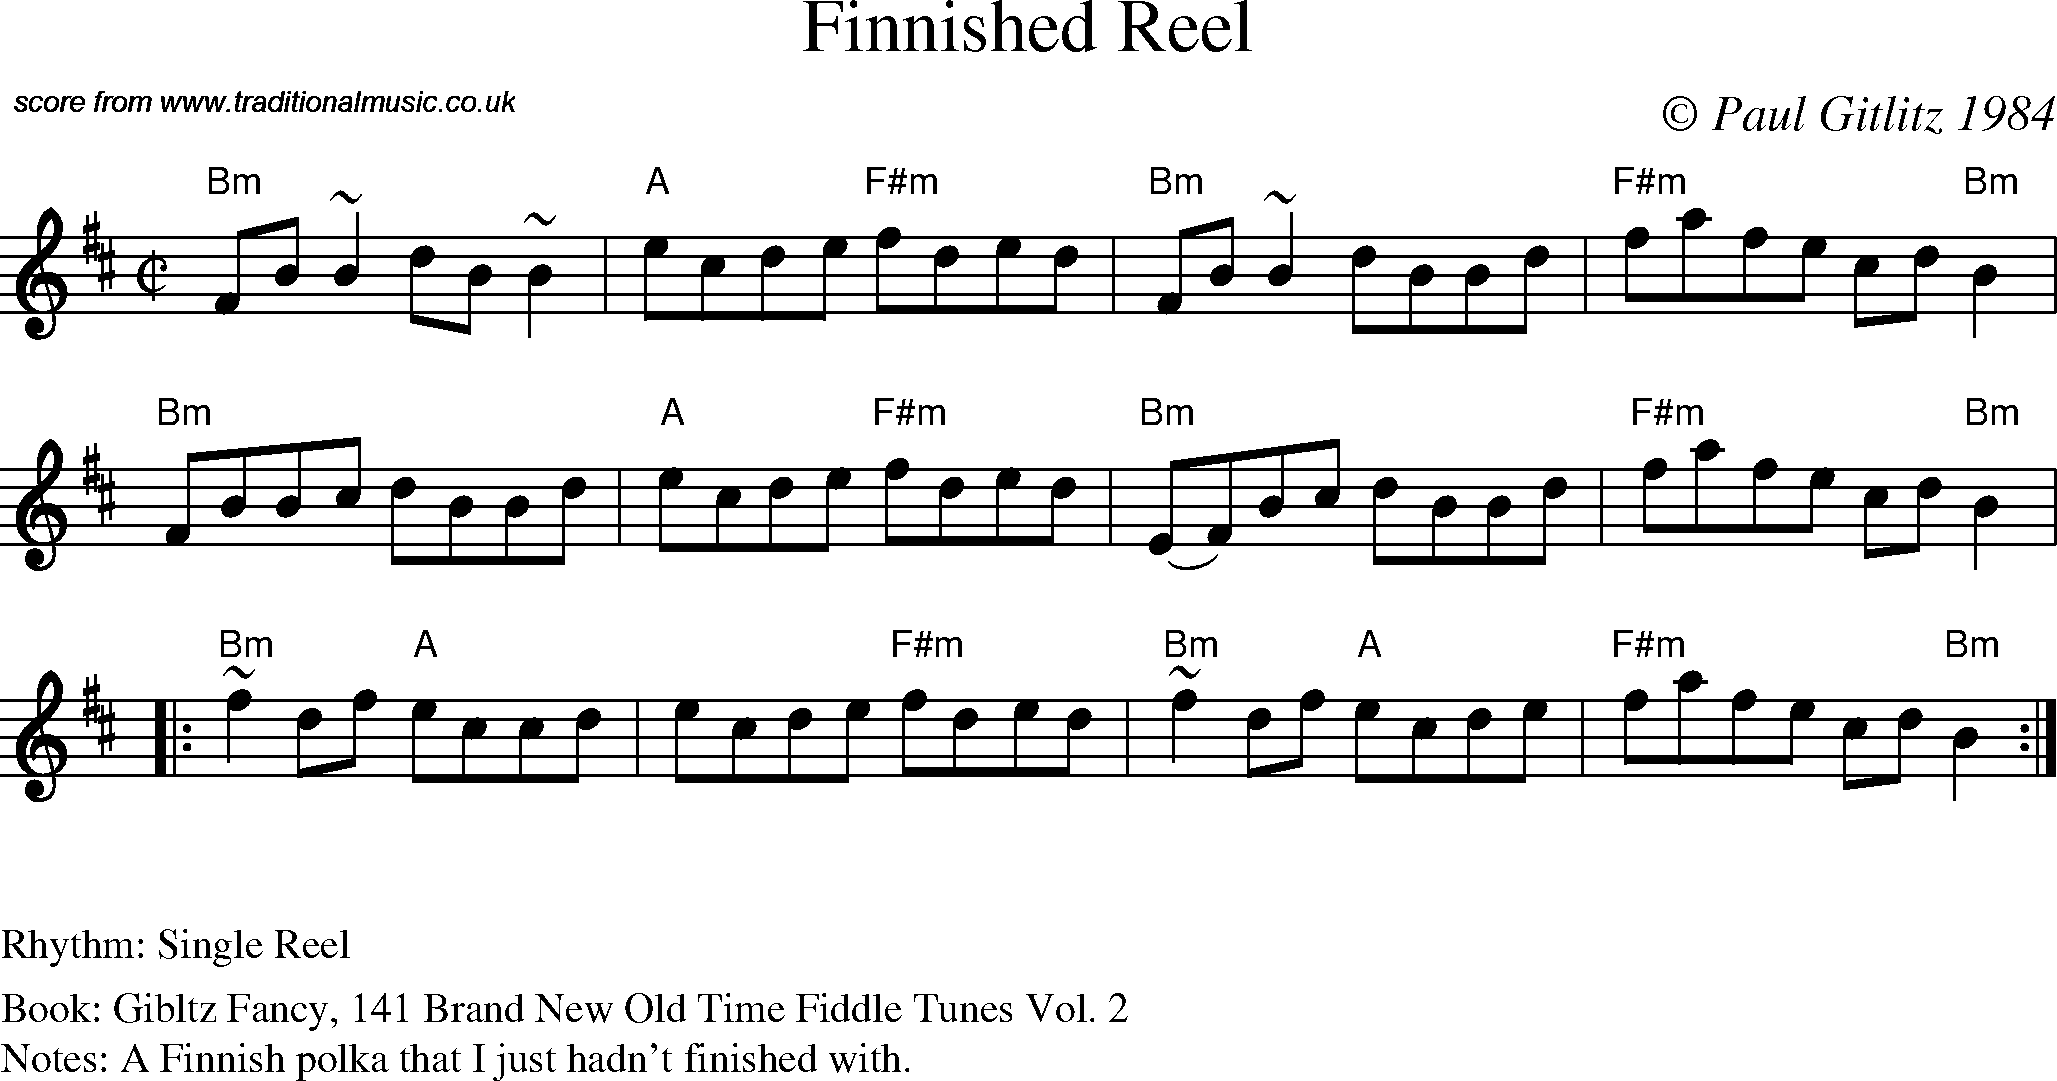 Sheet Music Score for Reel - Finnished Reel